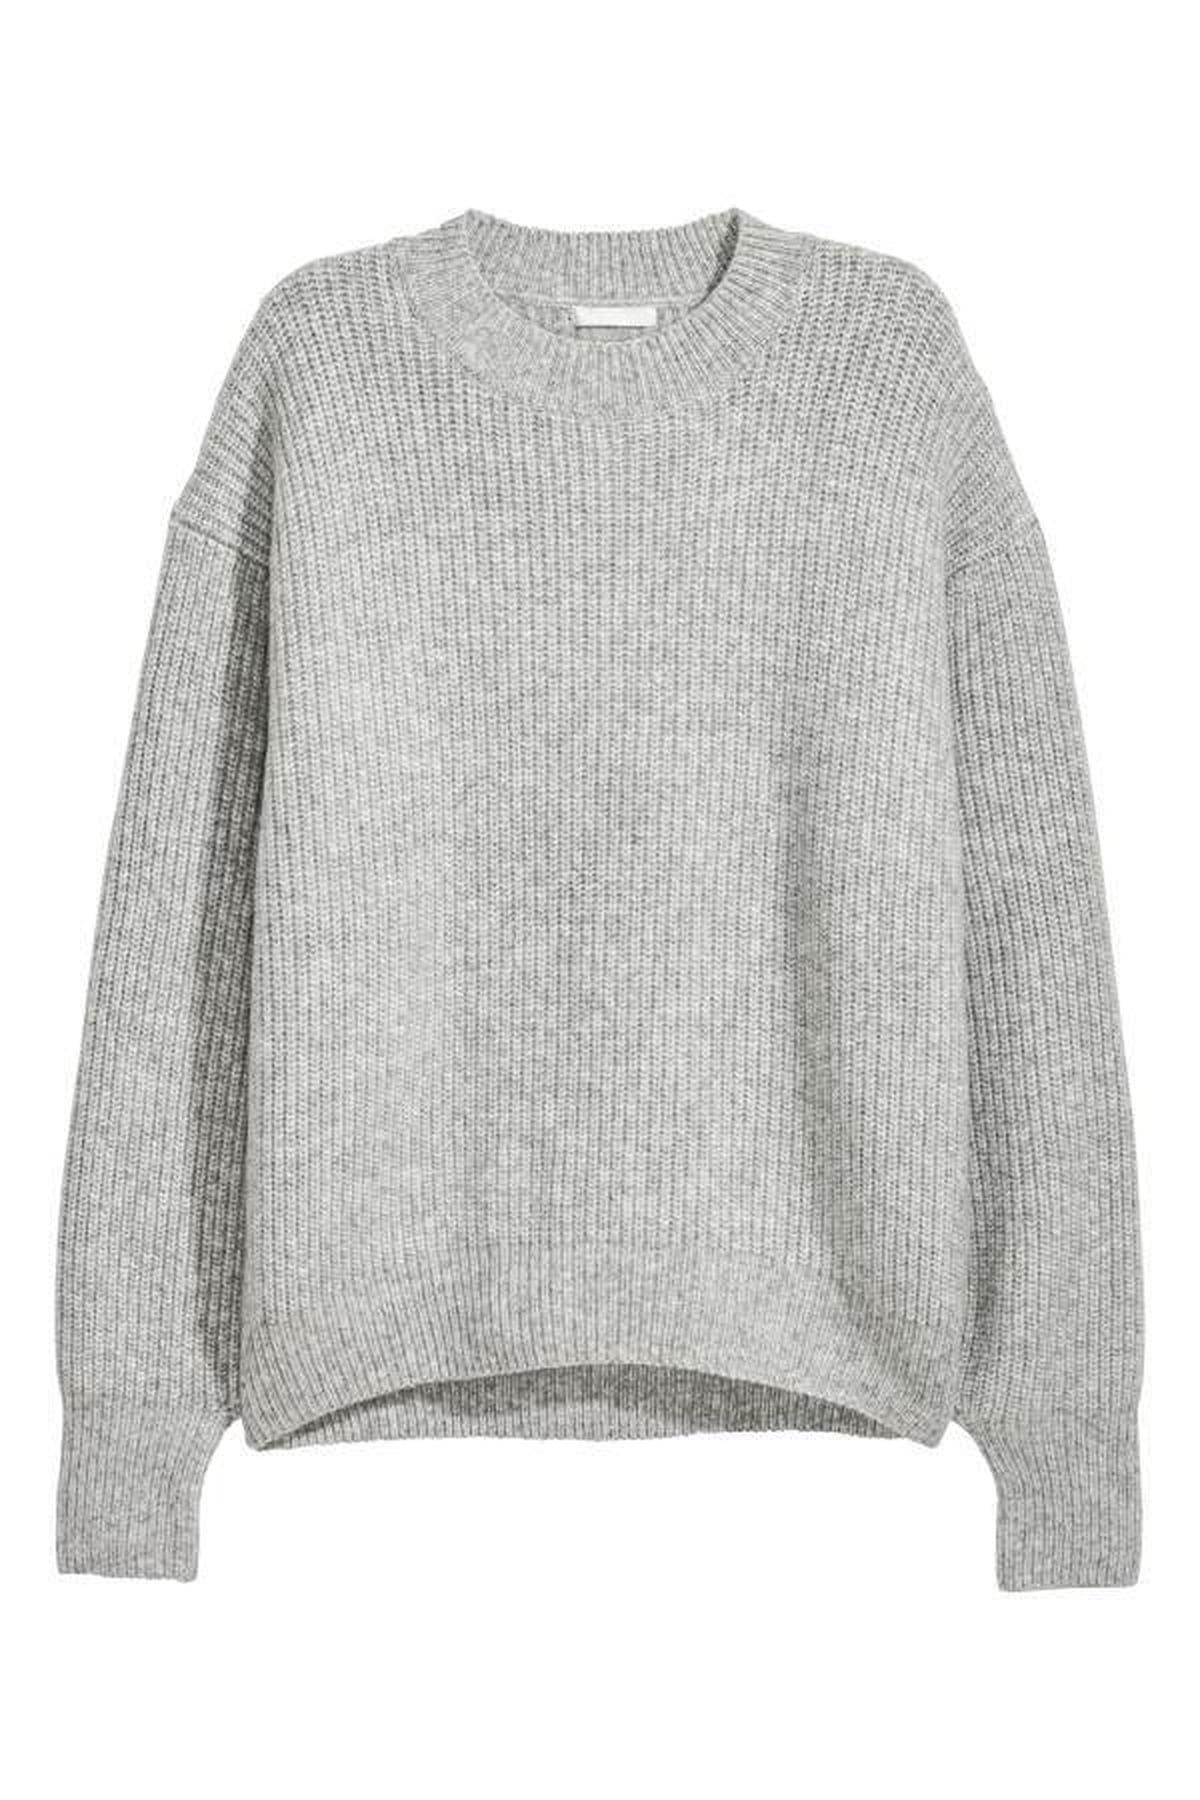 Miley Cyrus Gray Knit Sweater | POPSUGAR Fashion